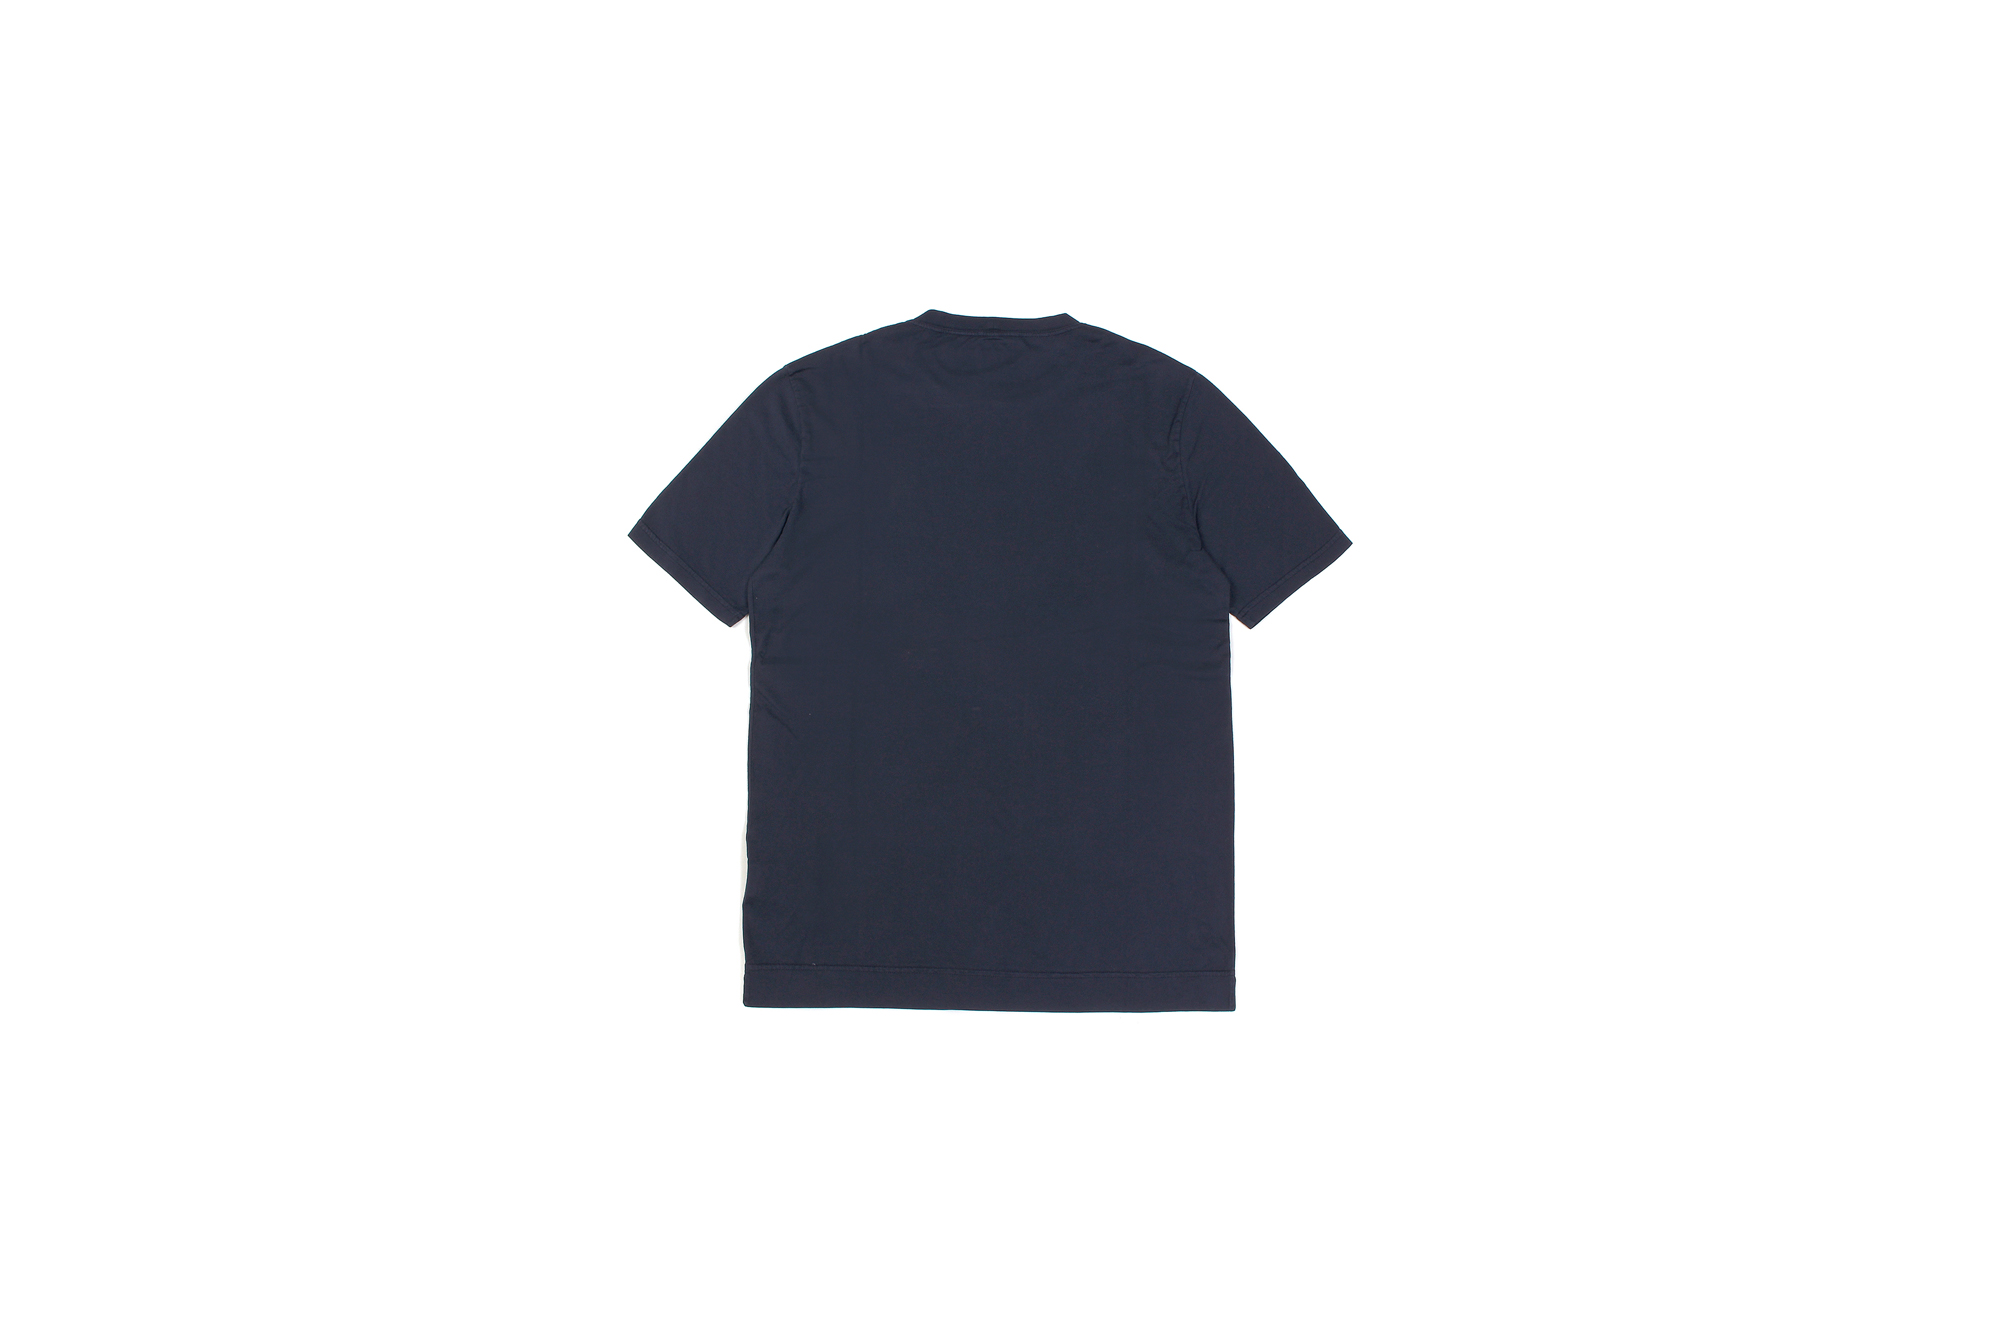 FEDELI(フェデーリ) Crew Neck T-shirt (クルーネック Tシャツ) ギザコットン Tシャツ NAVY (ネイビー・628) made in italy (イタリア製) 2020 春夏 【ご予約開始】愛知 名古屋 altoediritto アルトエデリット TEE